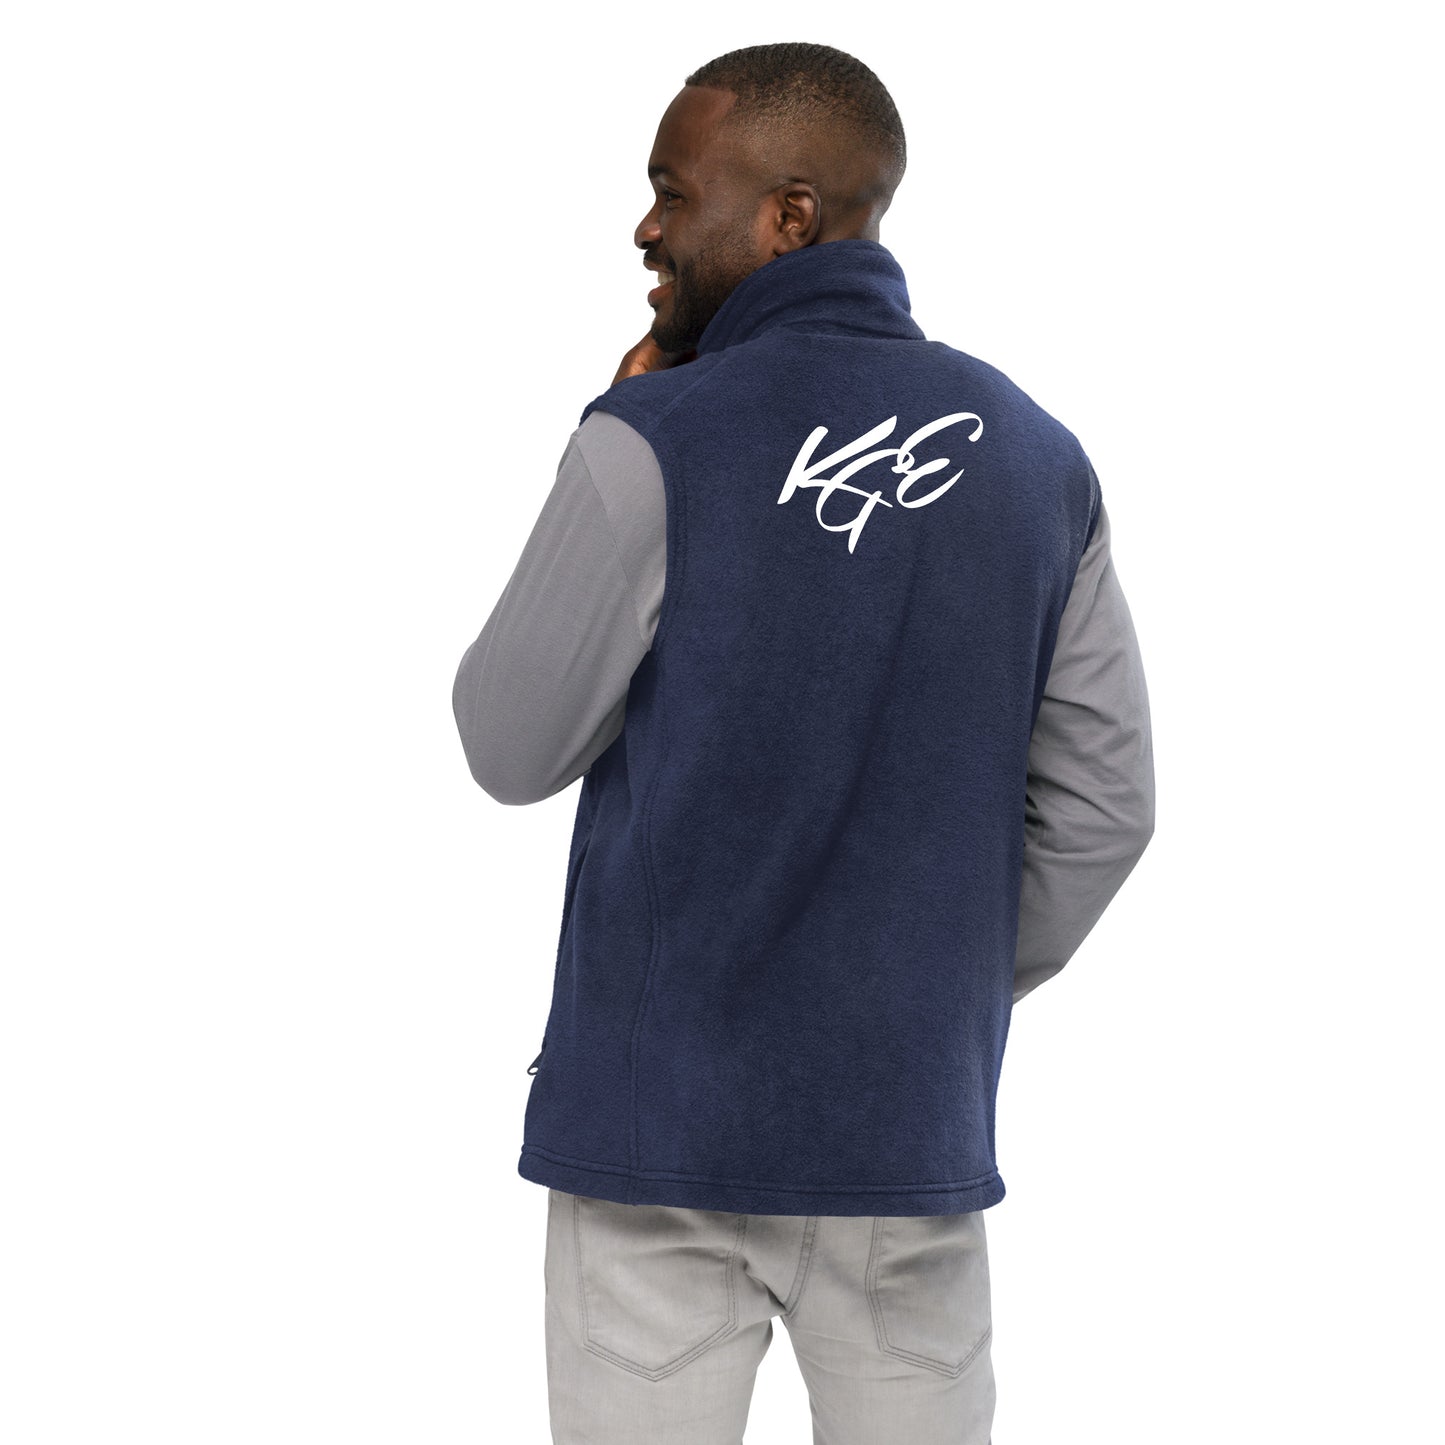 (New) Men’s KGE Columbia fleece vest Sizes (Sizes S-3XL)